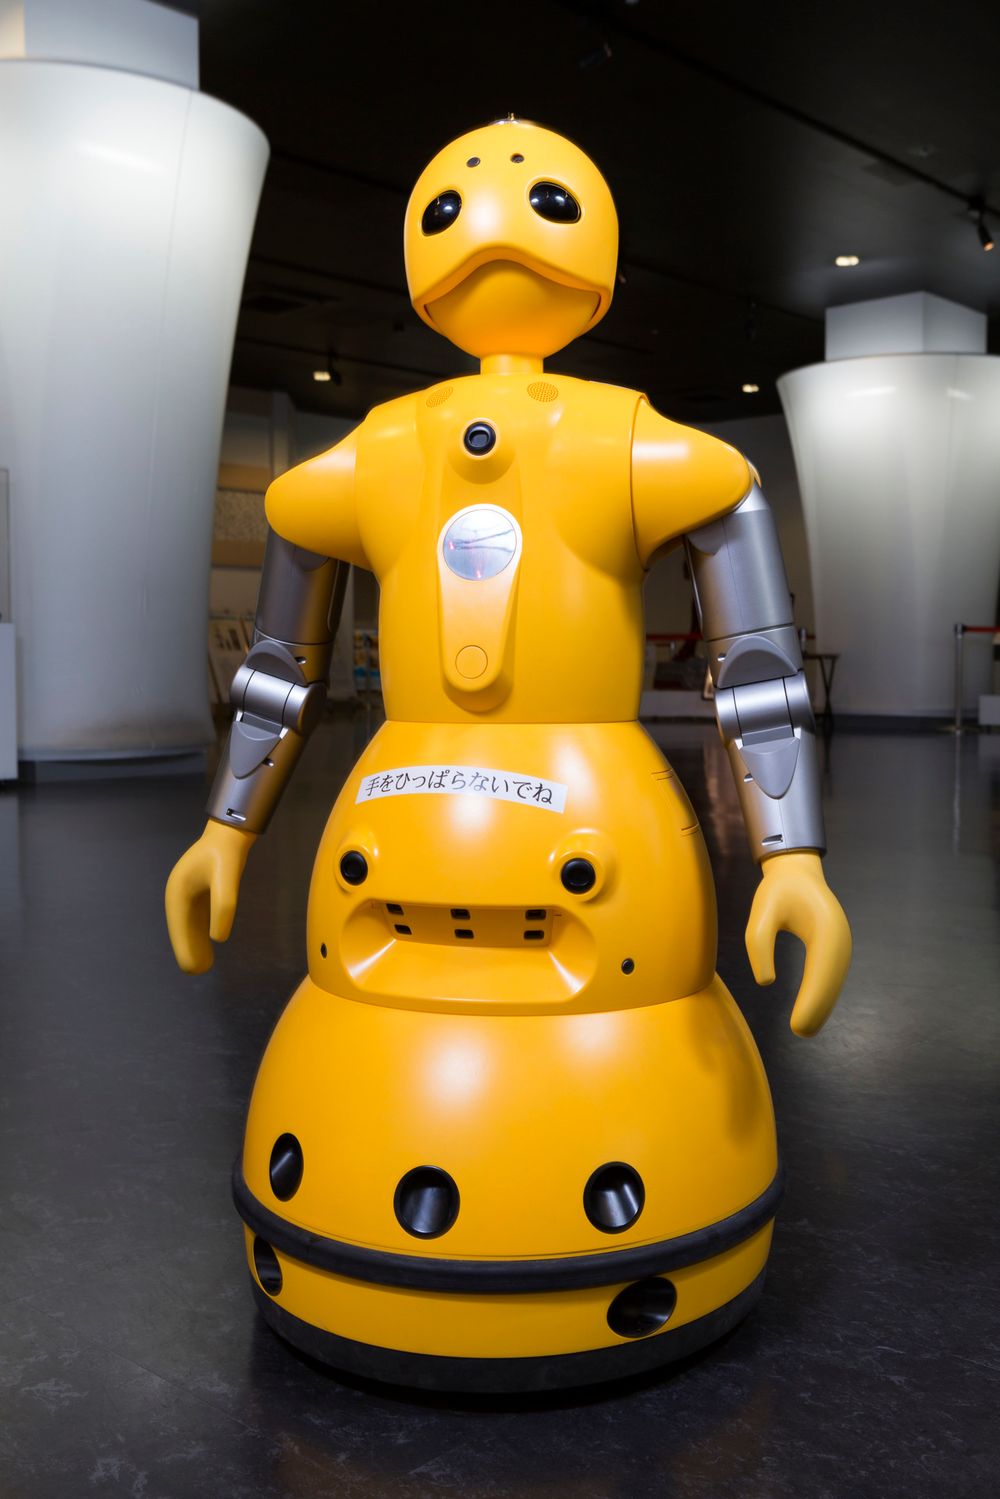 A robot at the robotics company Cyberdyne, Japan.